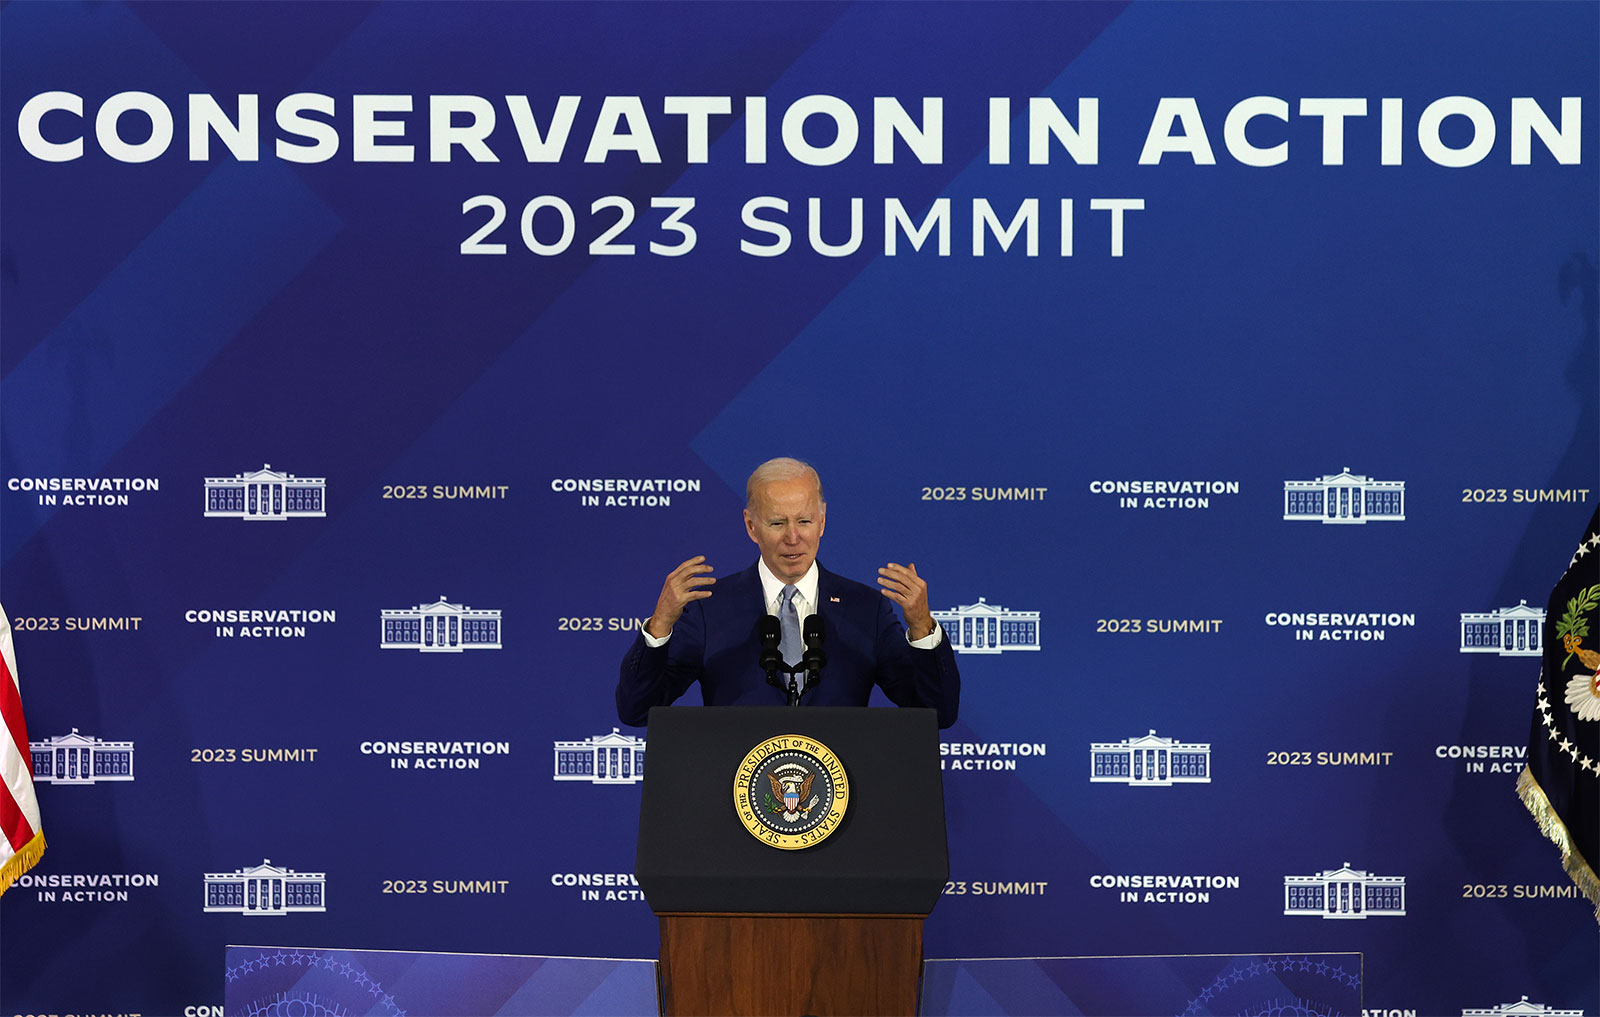 President Joe Biden delivering a speech at Conservation Action Summit 2023